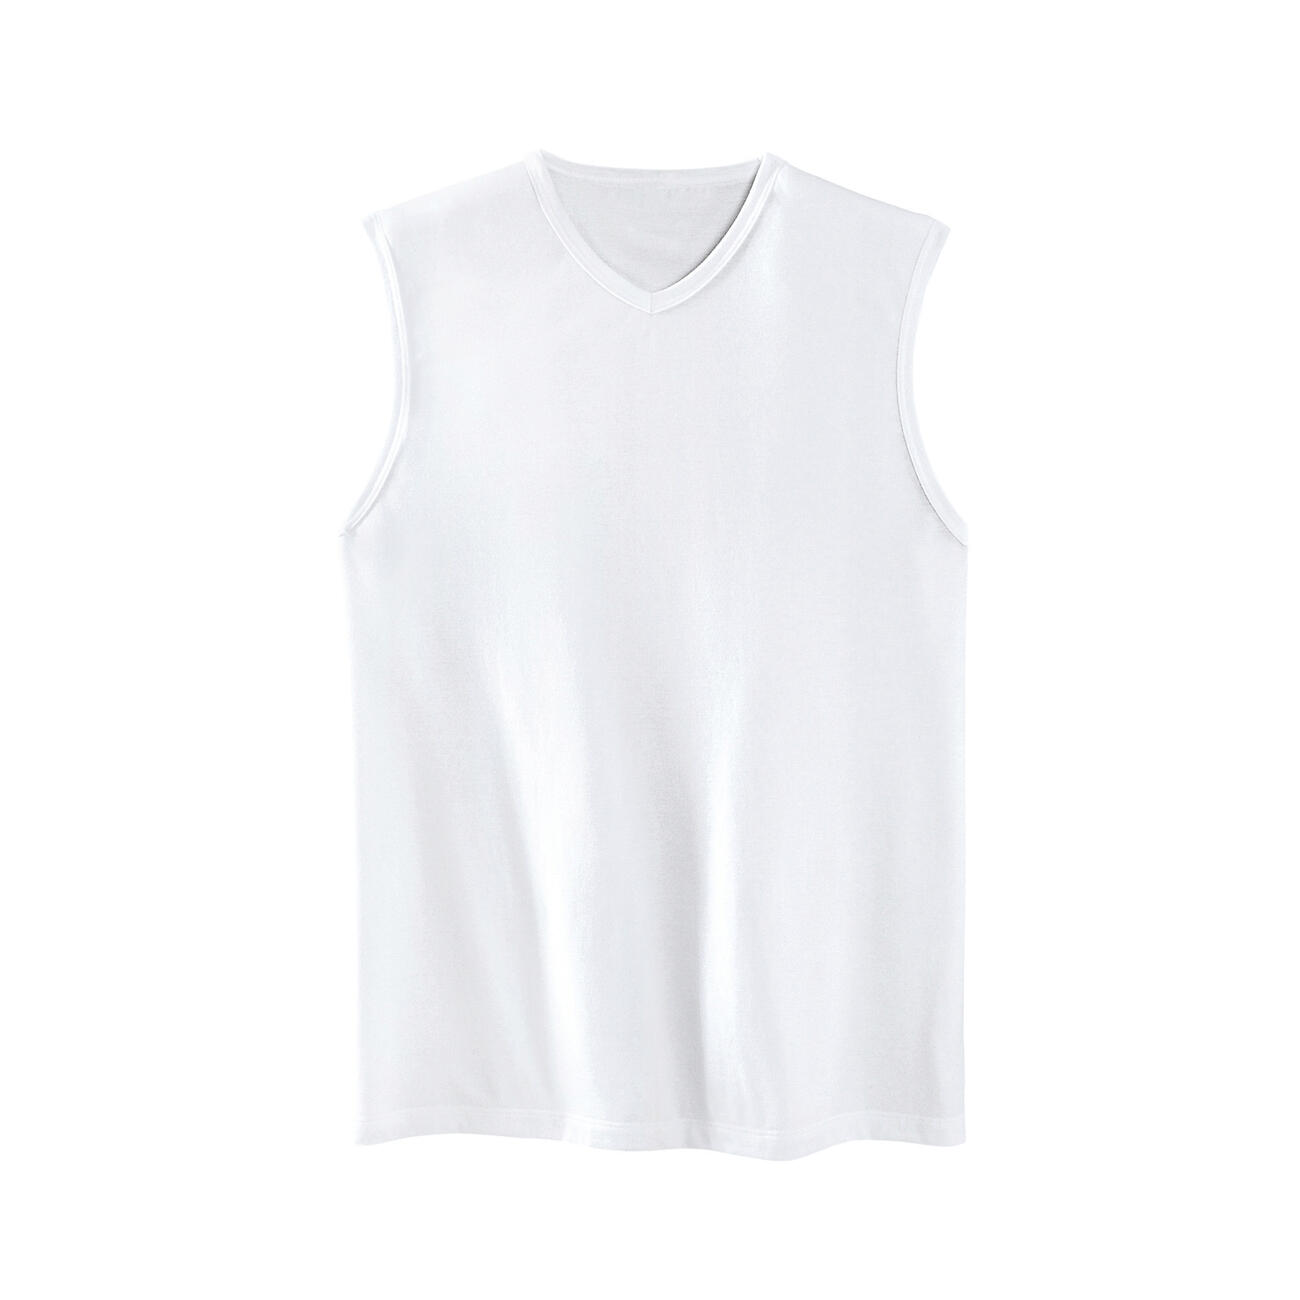 Buy Sleeveless T-shirt, Round neck or V-neck online